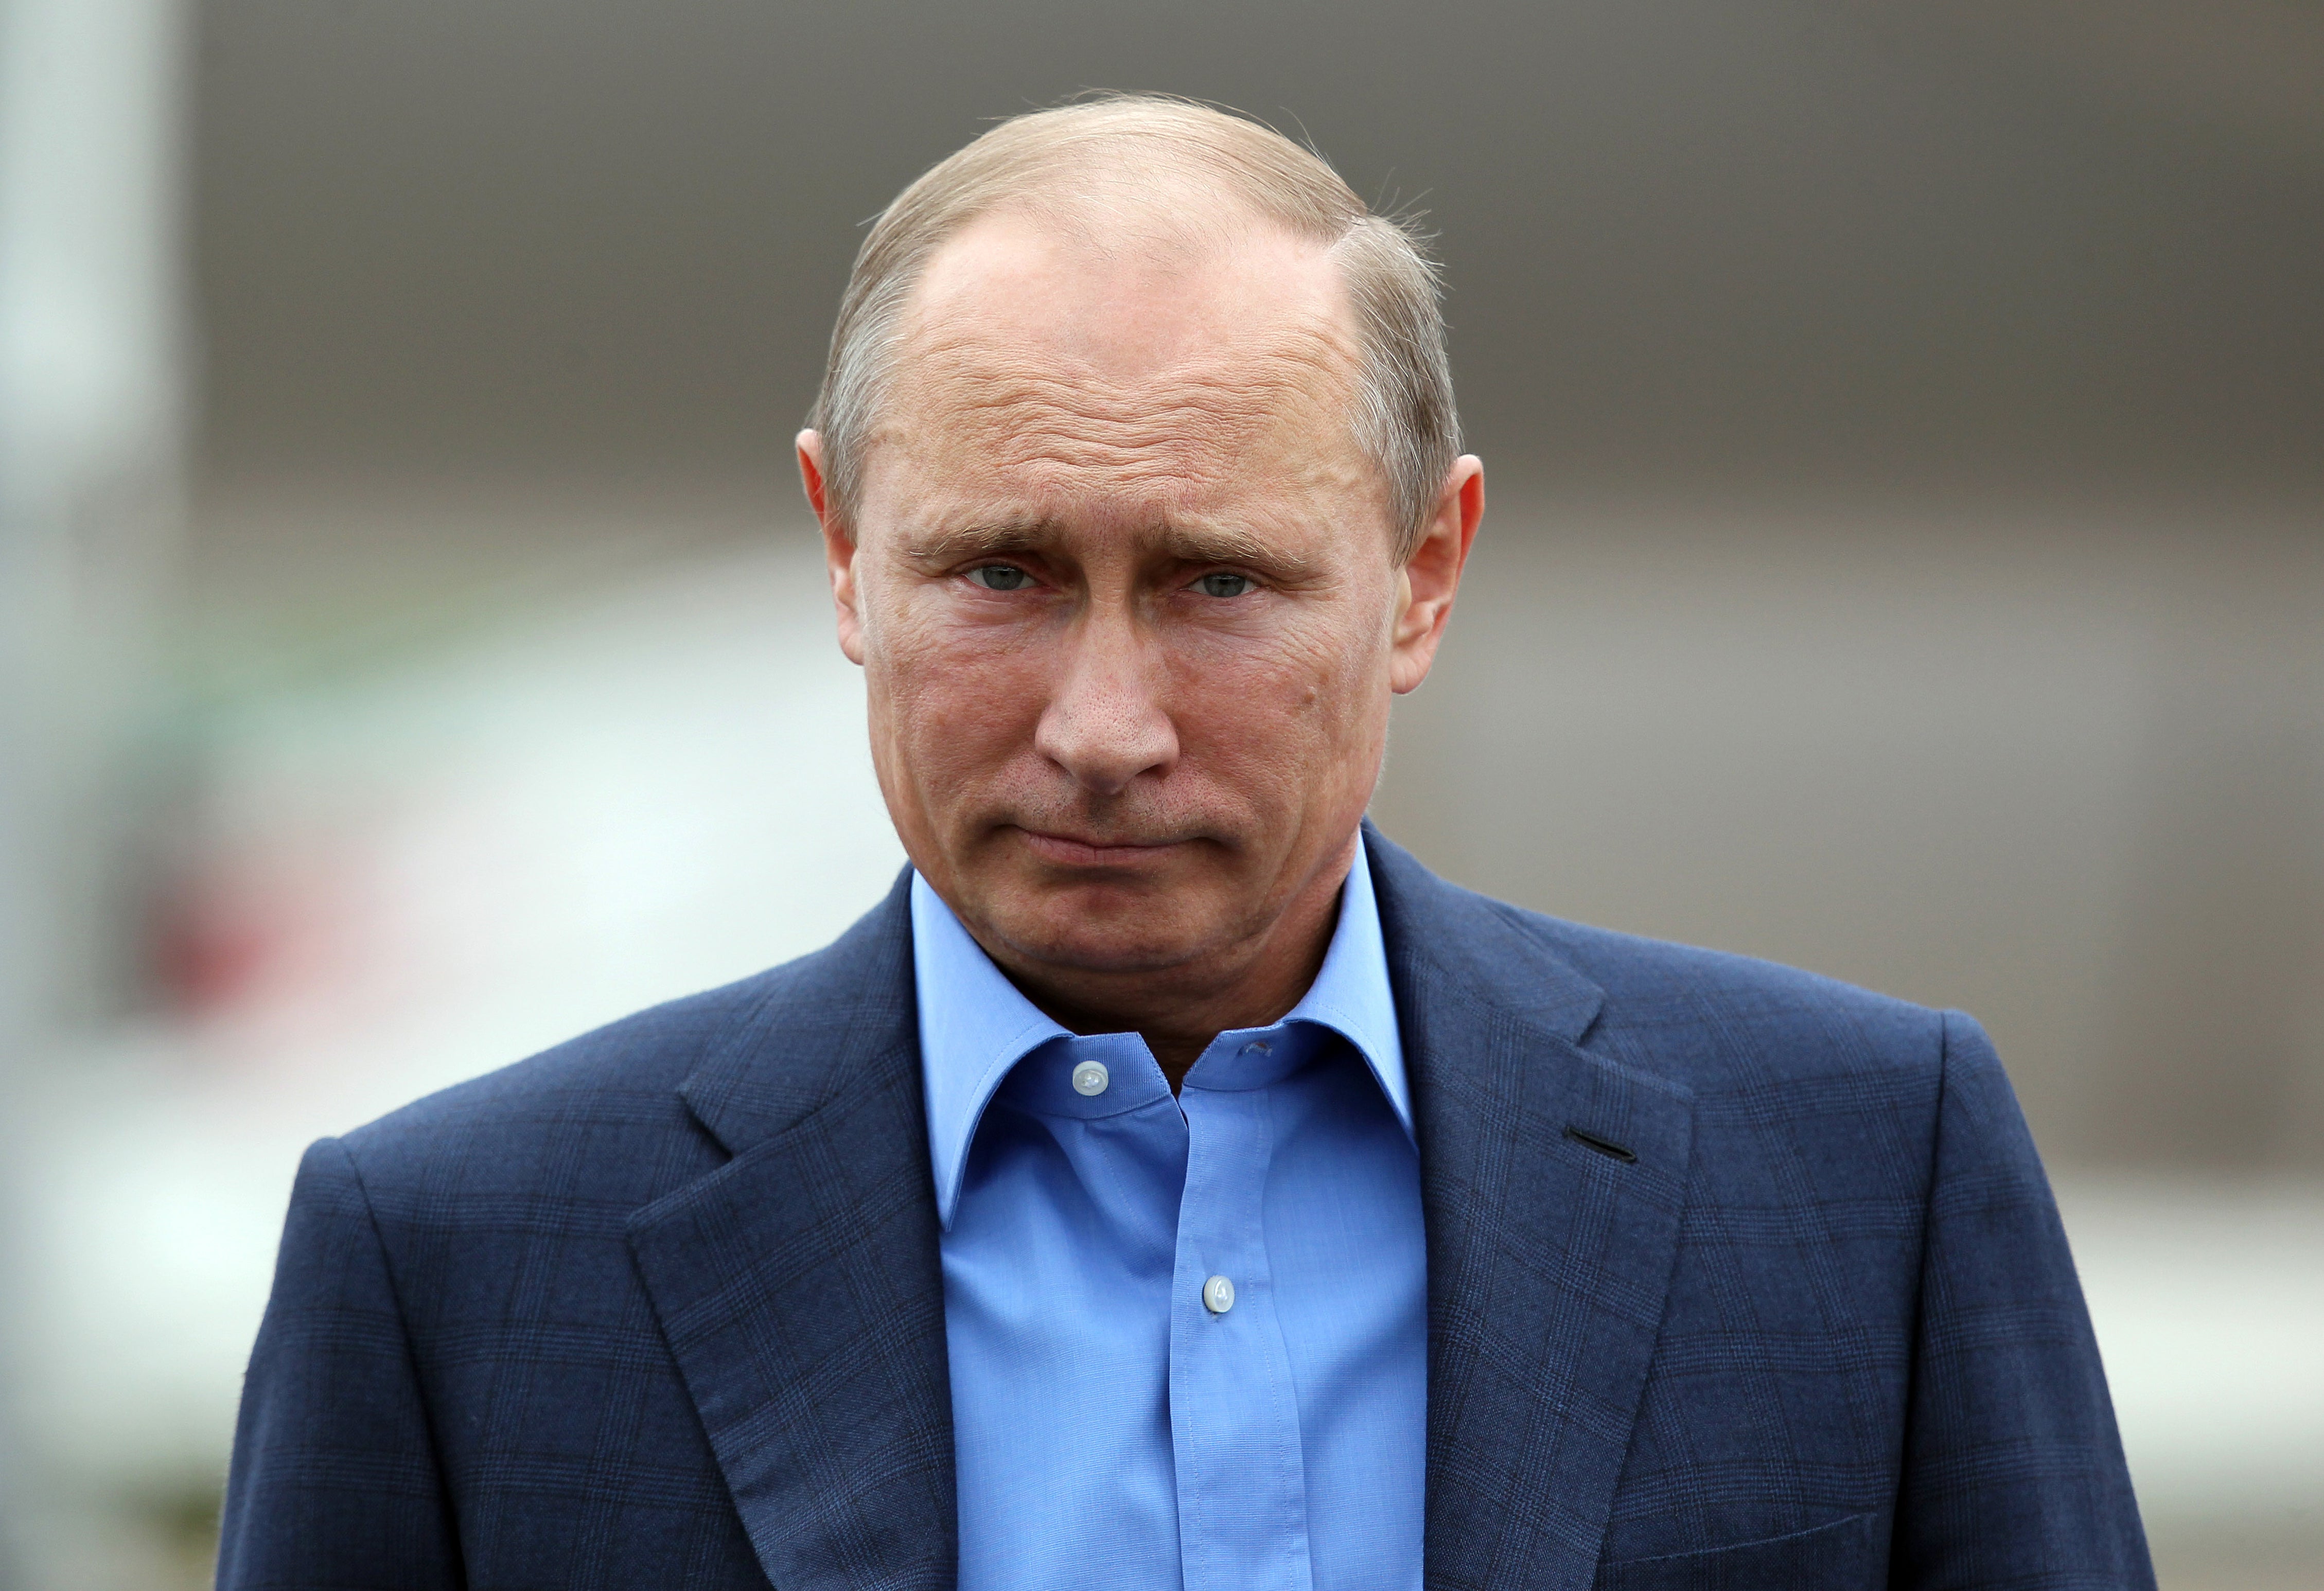 Presidente de Rusia, Vladimir Putin